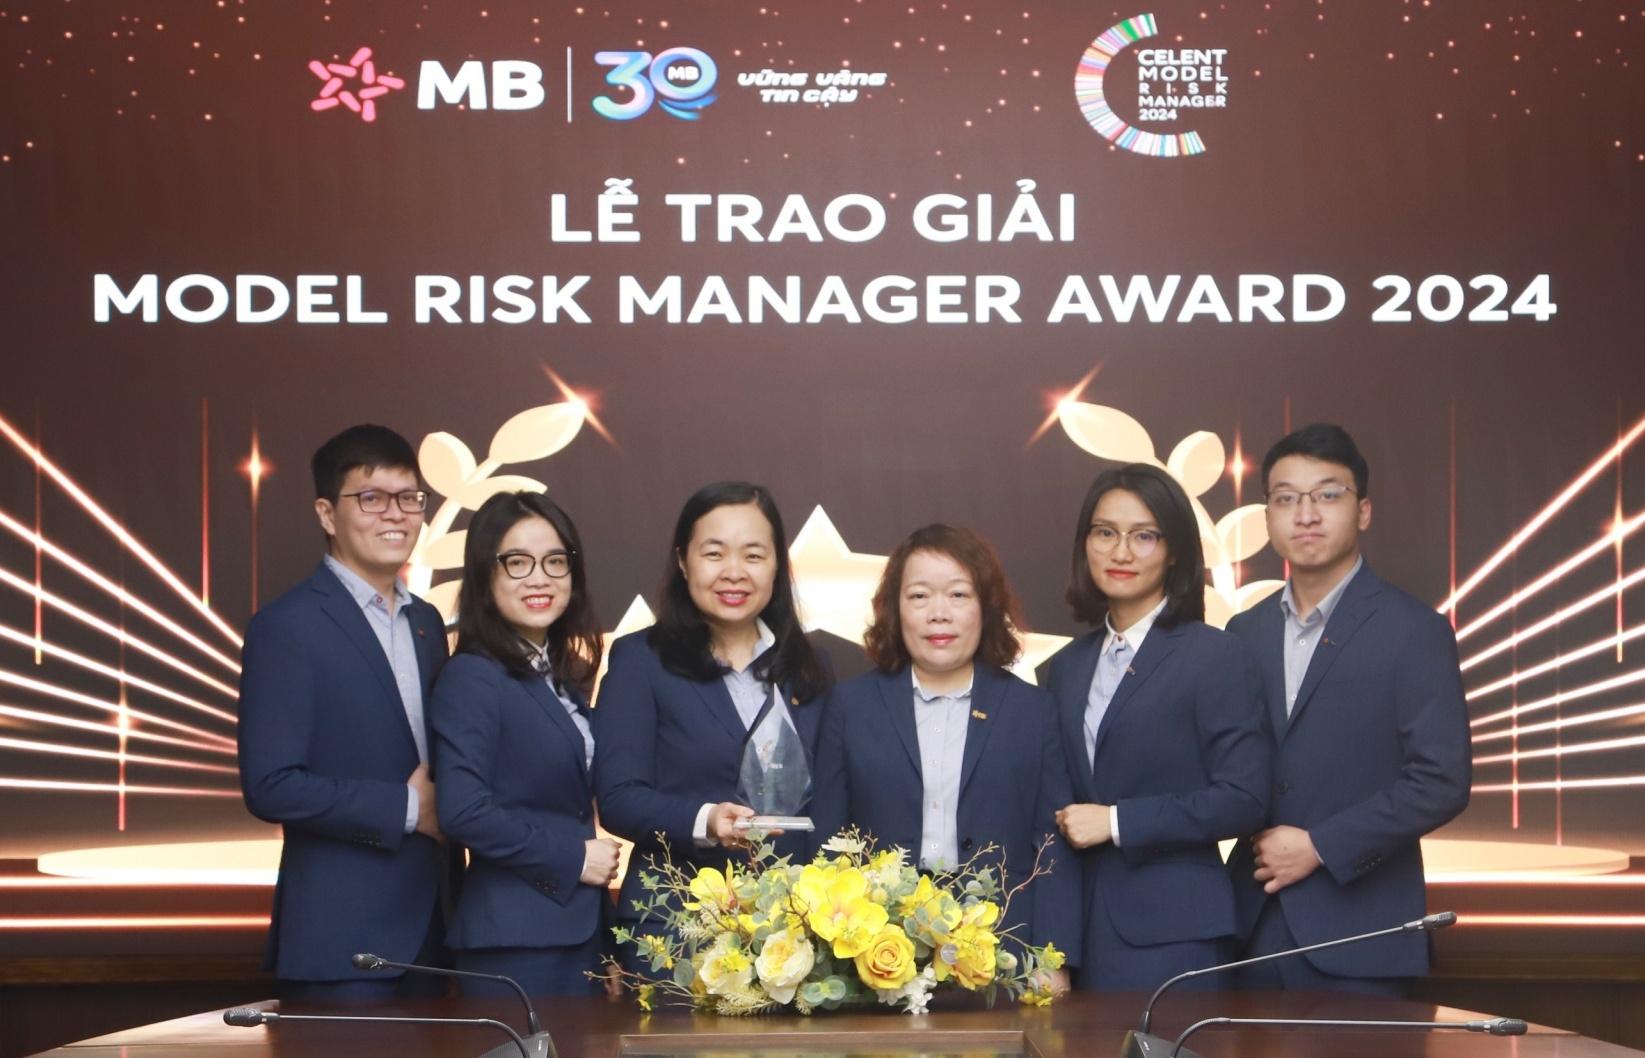 MB secures prestigious international award for excellence in risk management